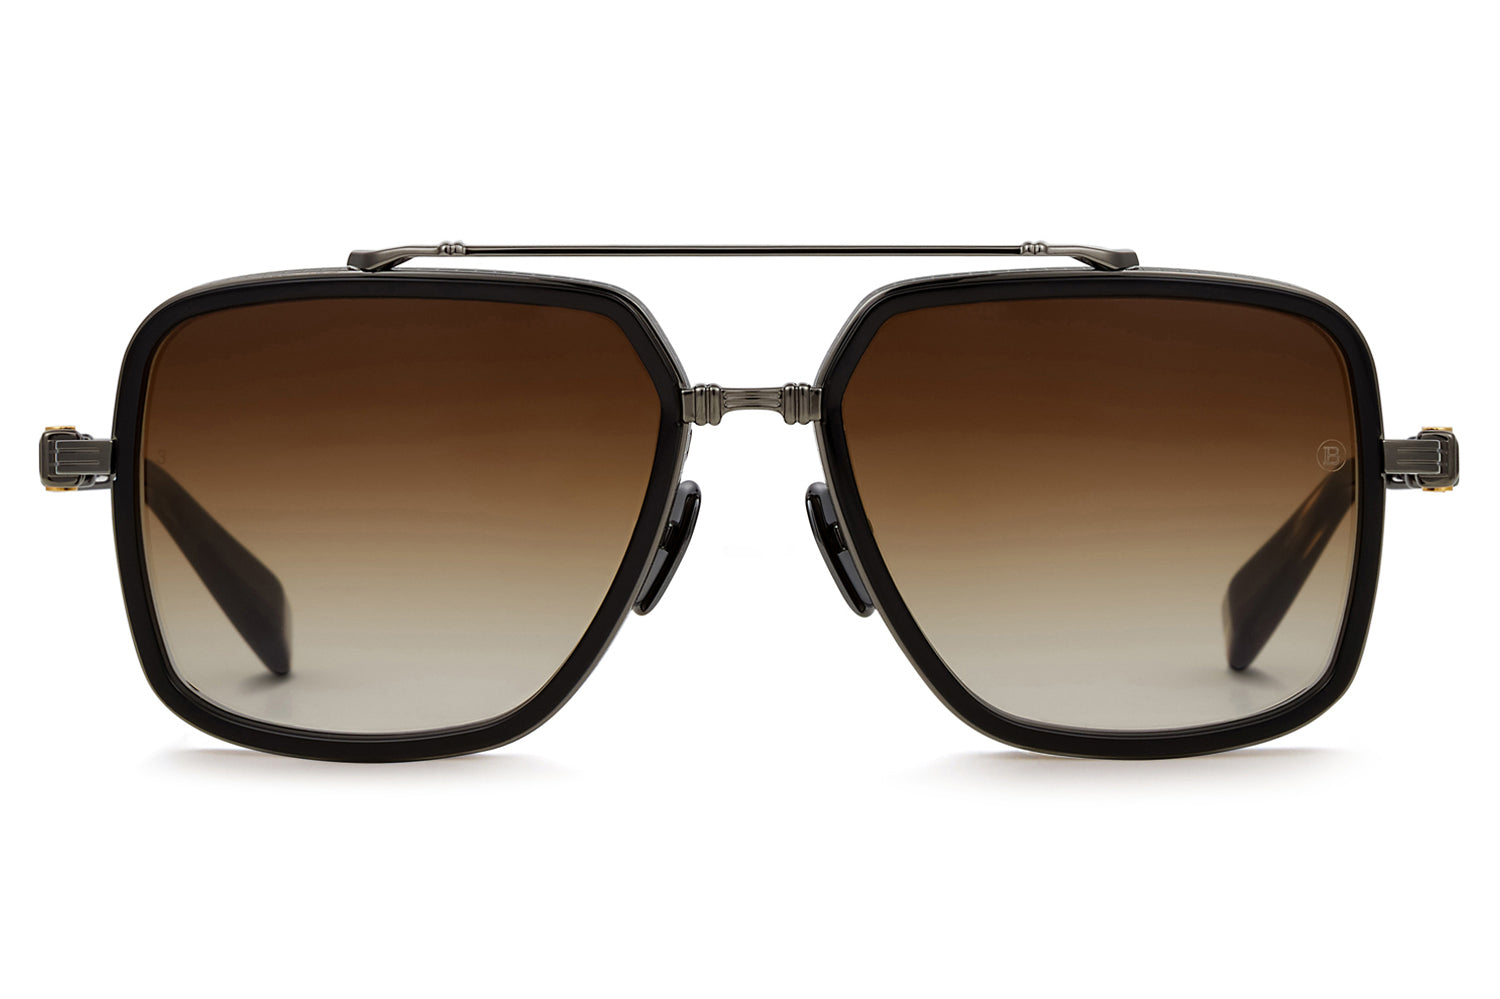 Chanel First Copy Sunglasses India DVCH6-2 - Designers Village